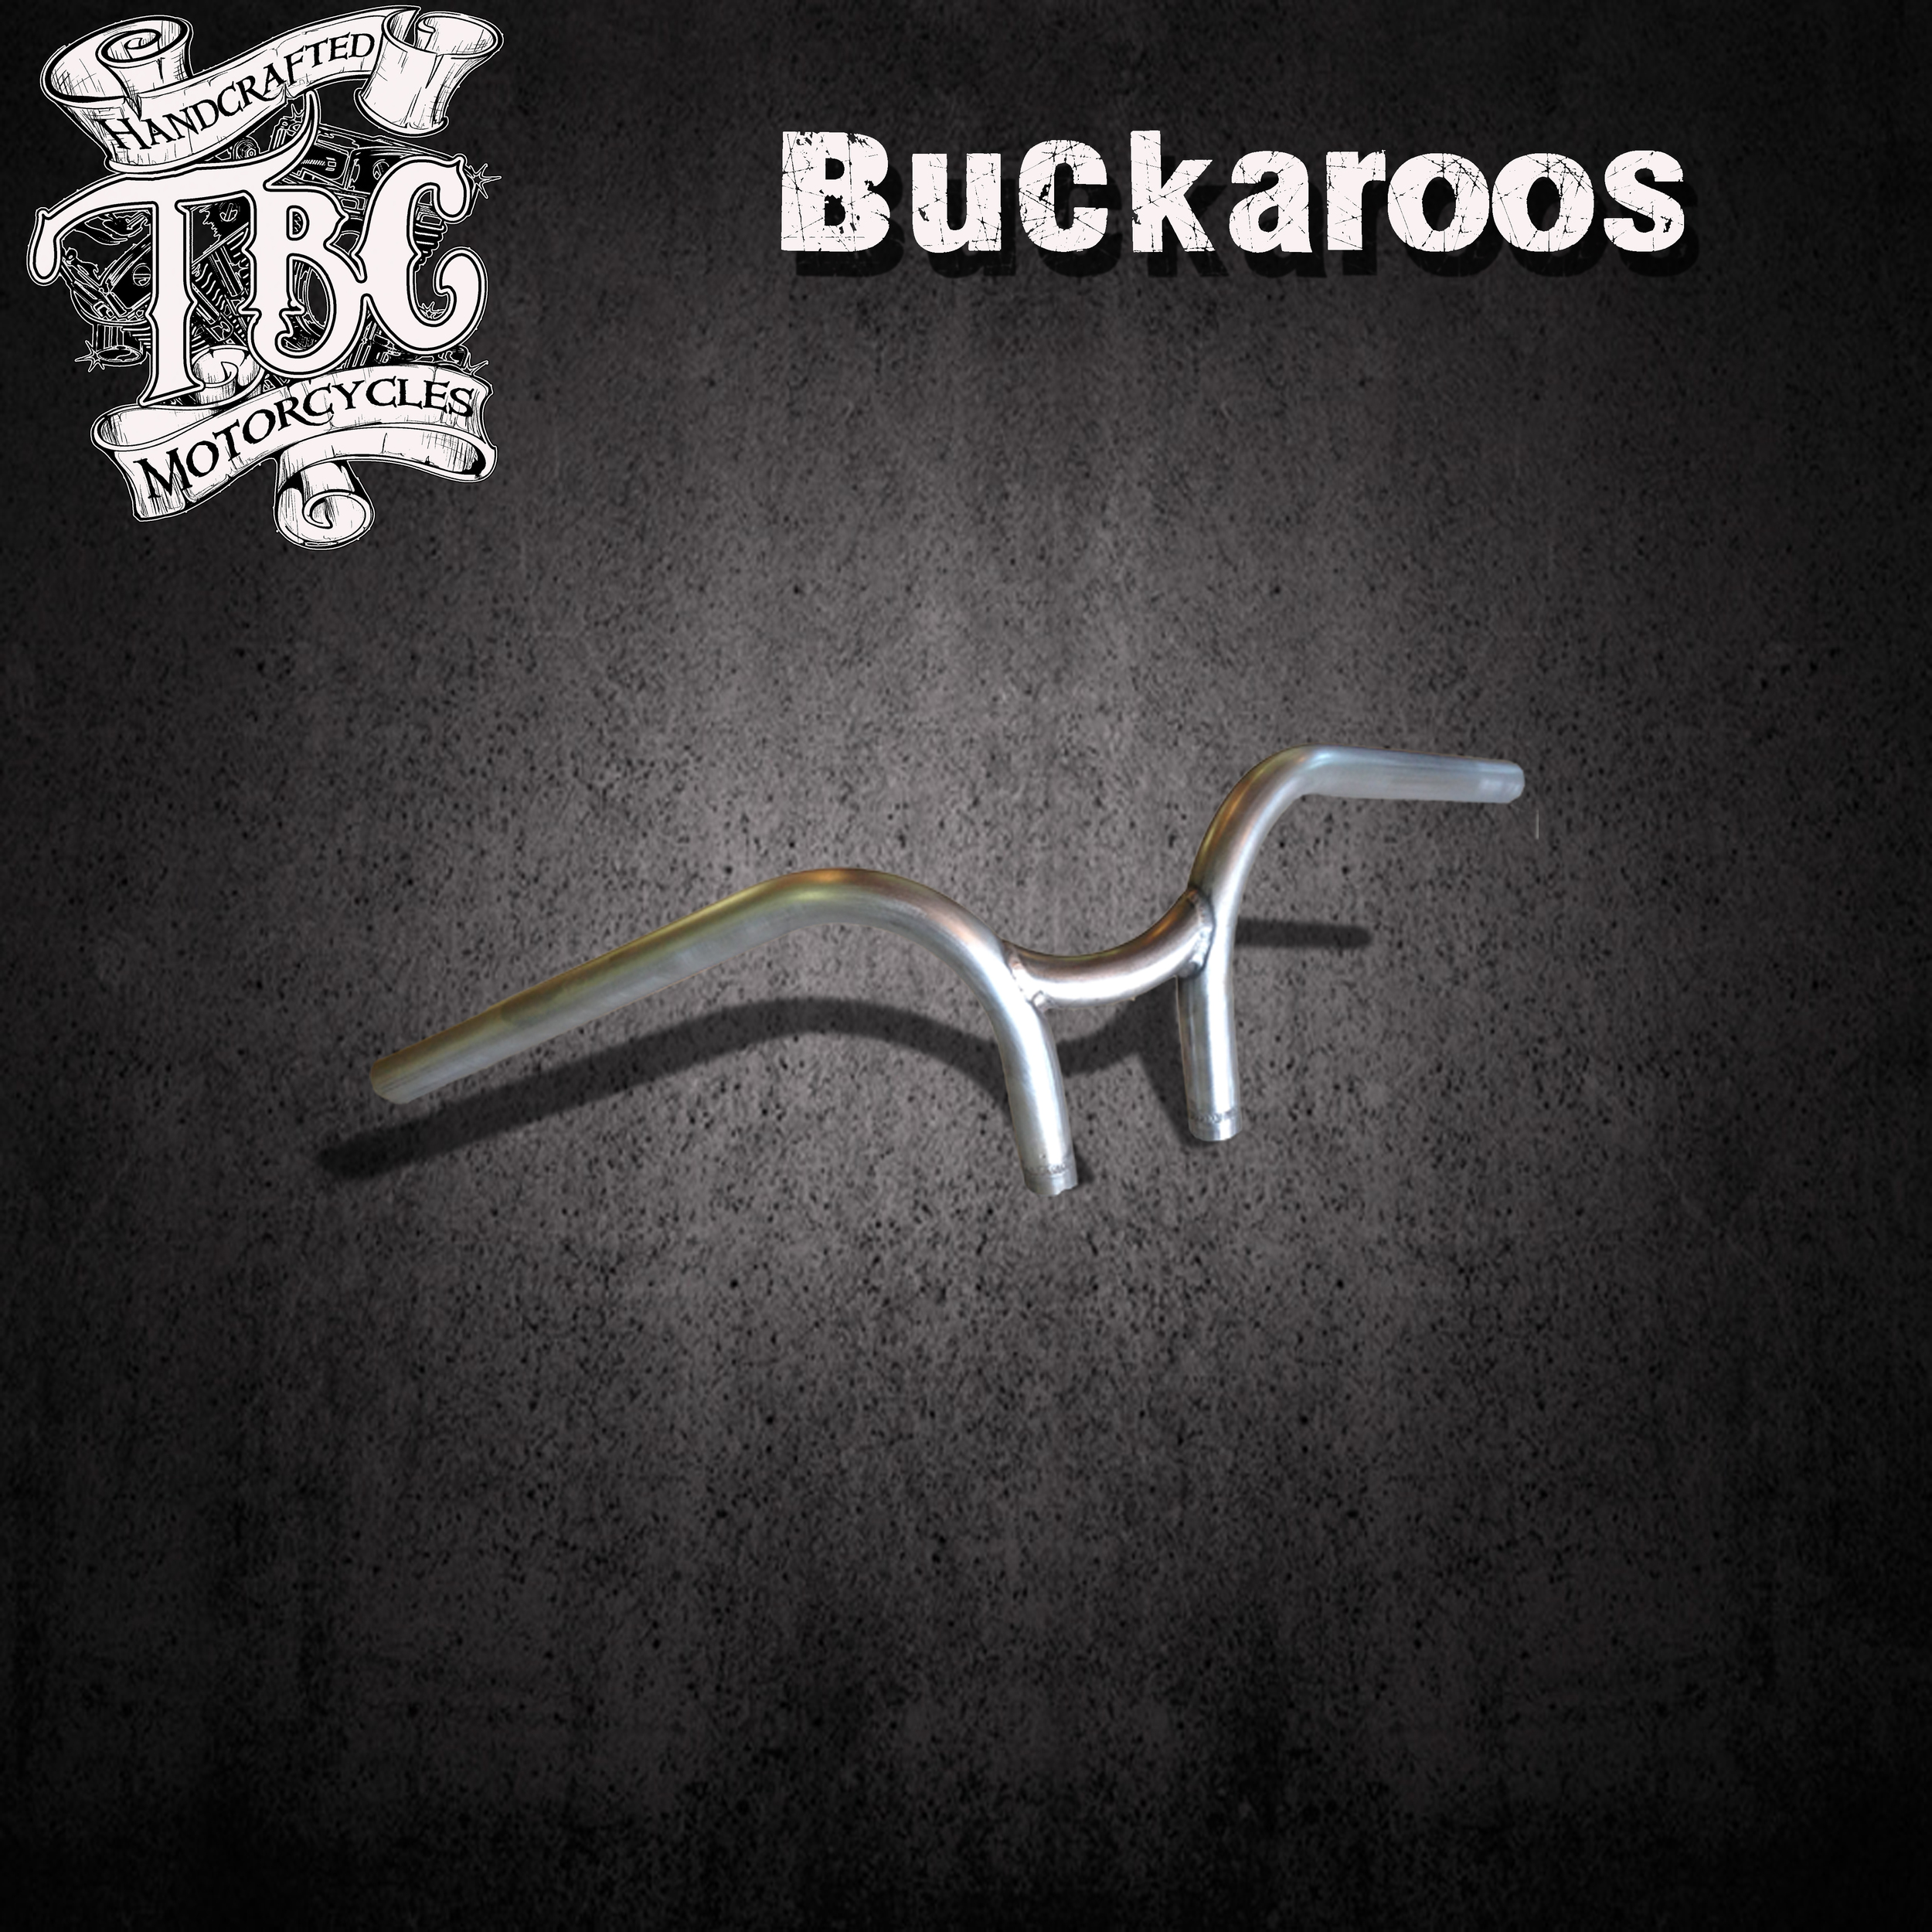 Buckaroos - Copy.jpg